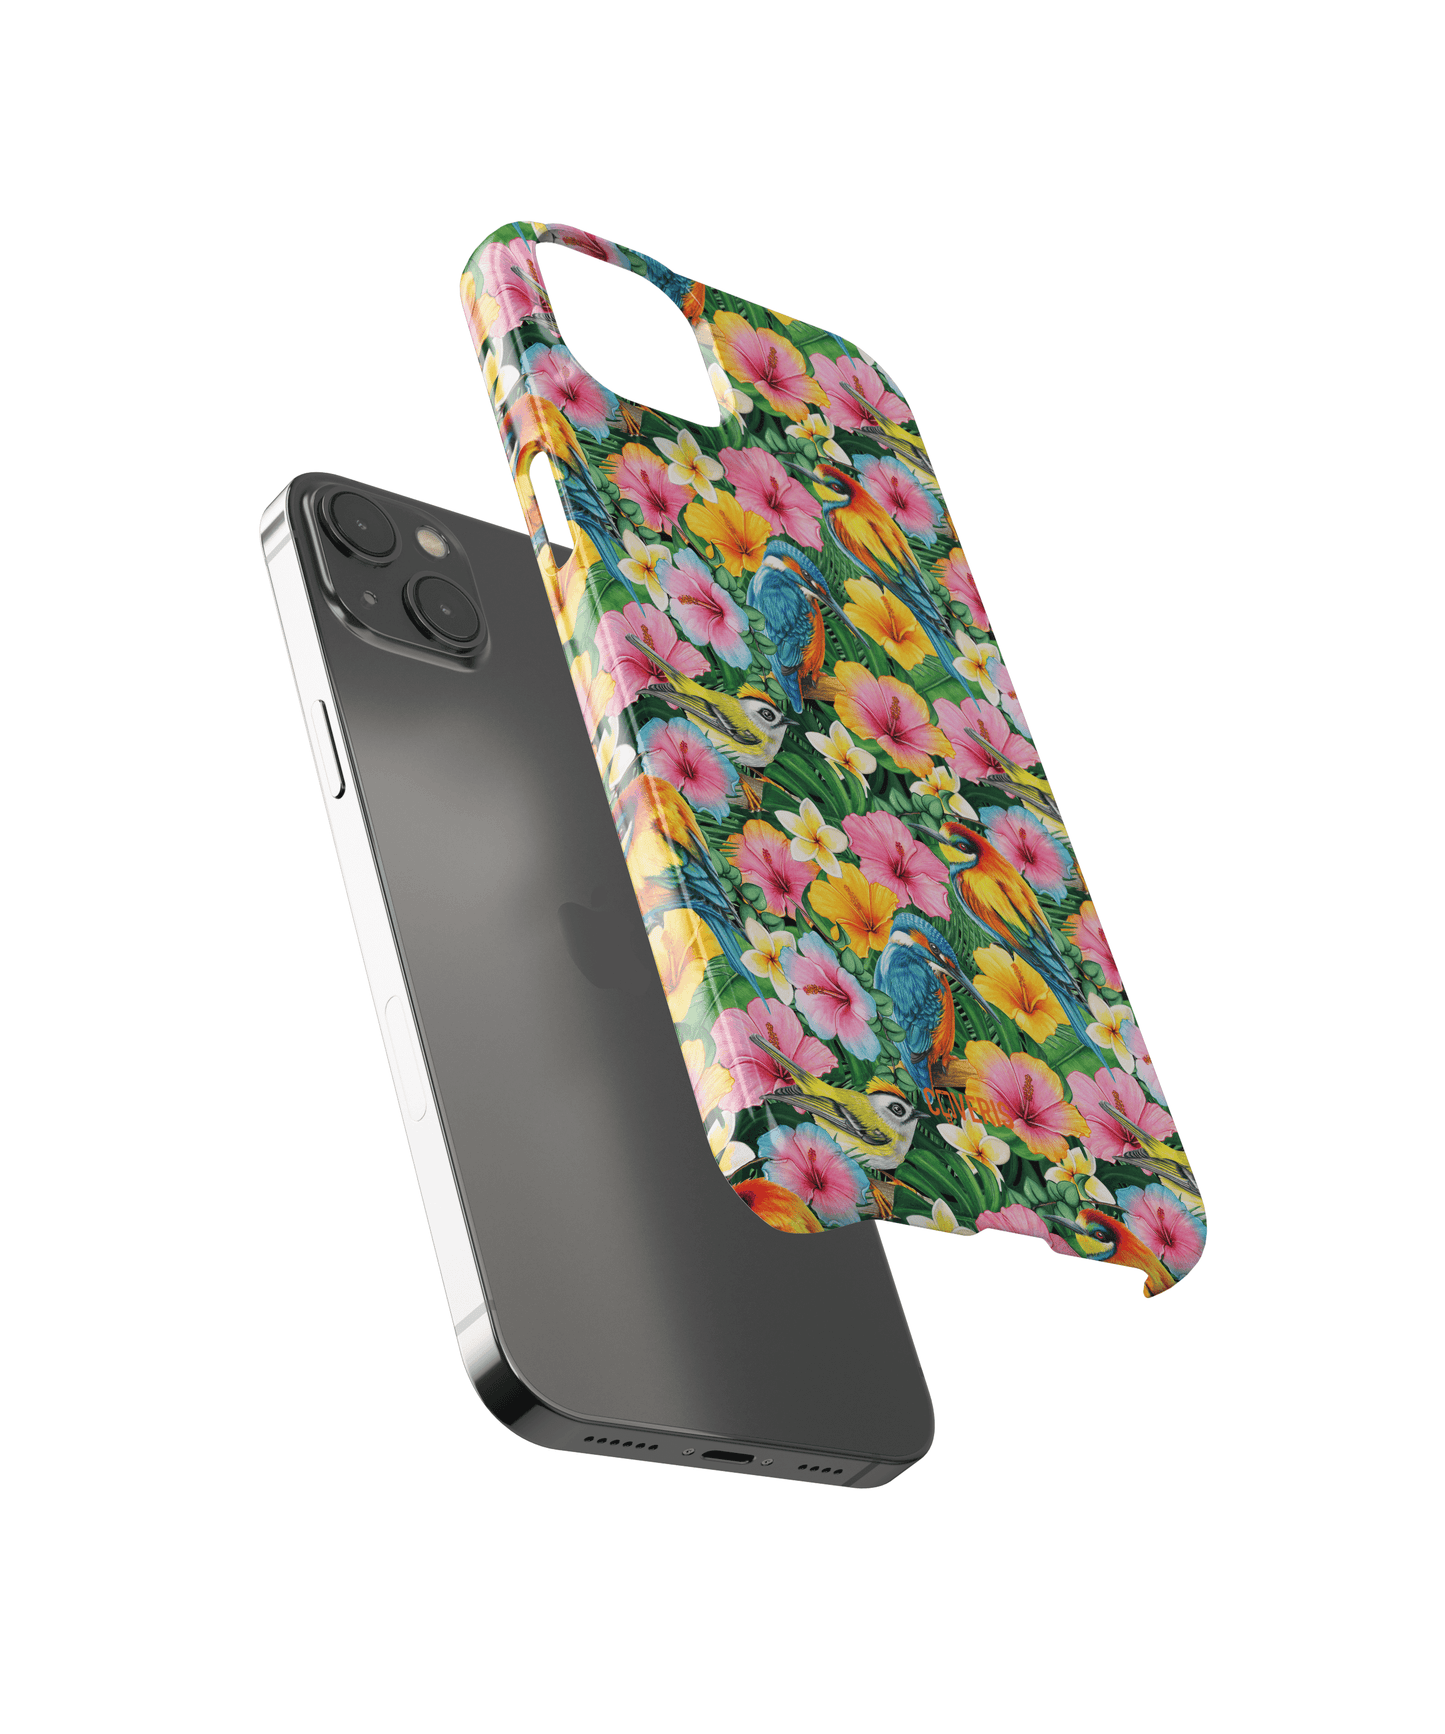 Islander - iPhone 11 pro phone case